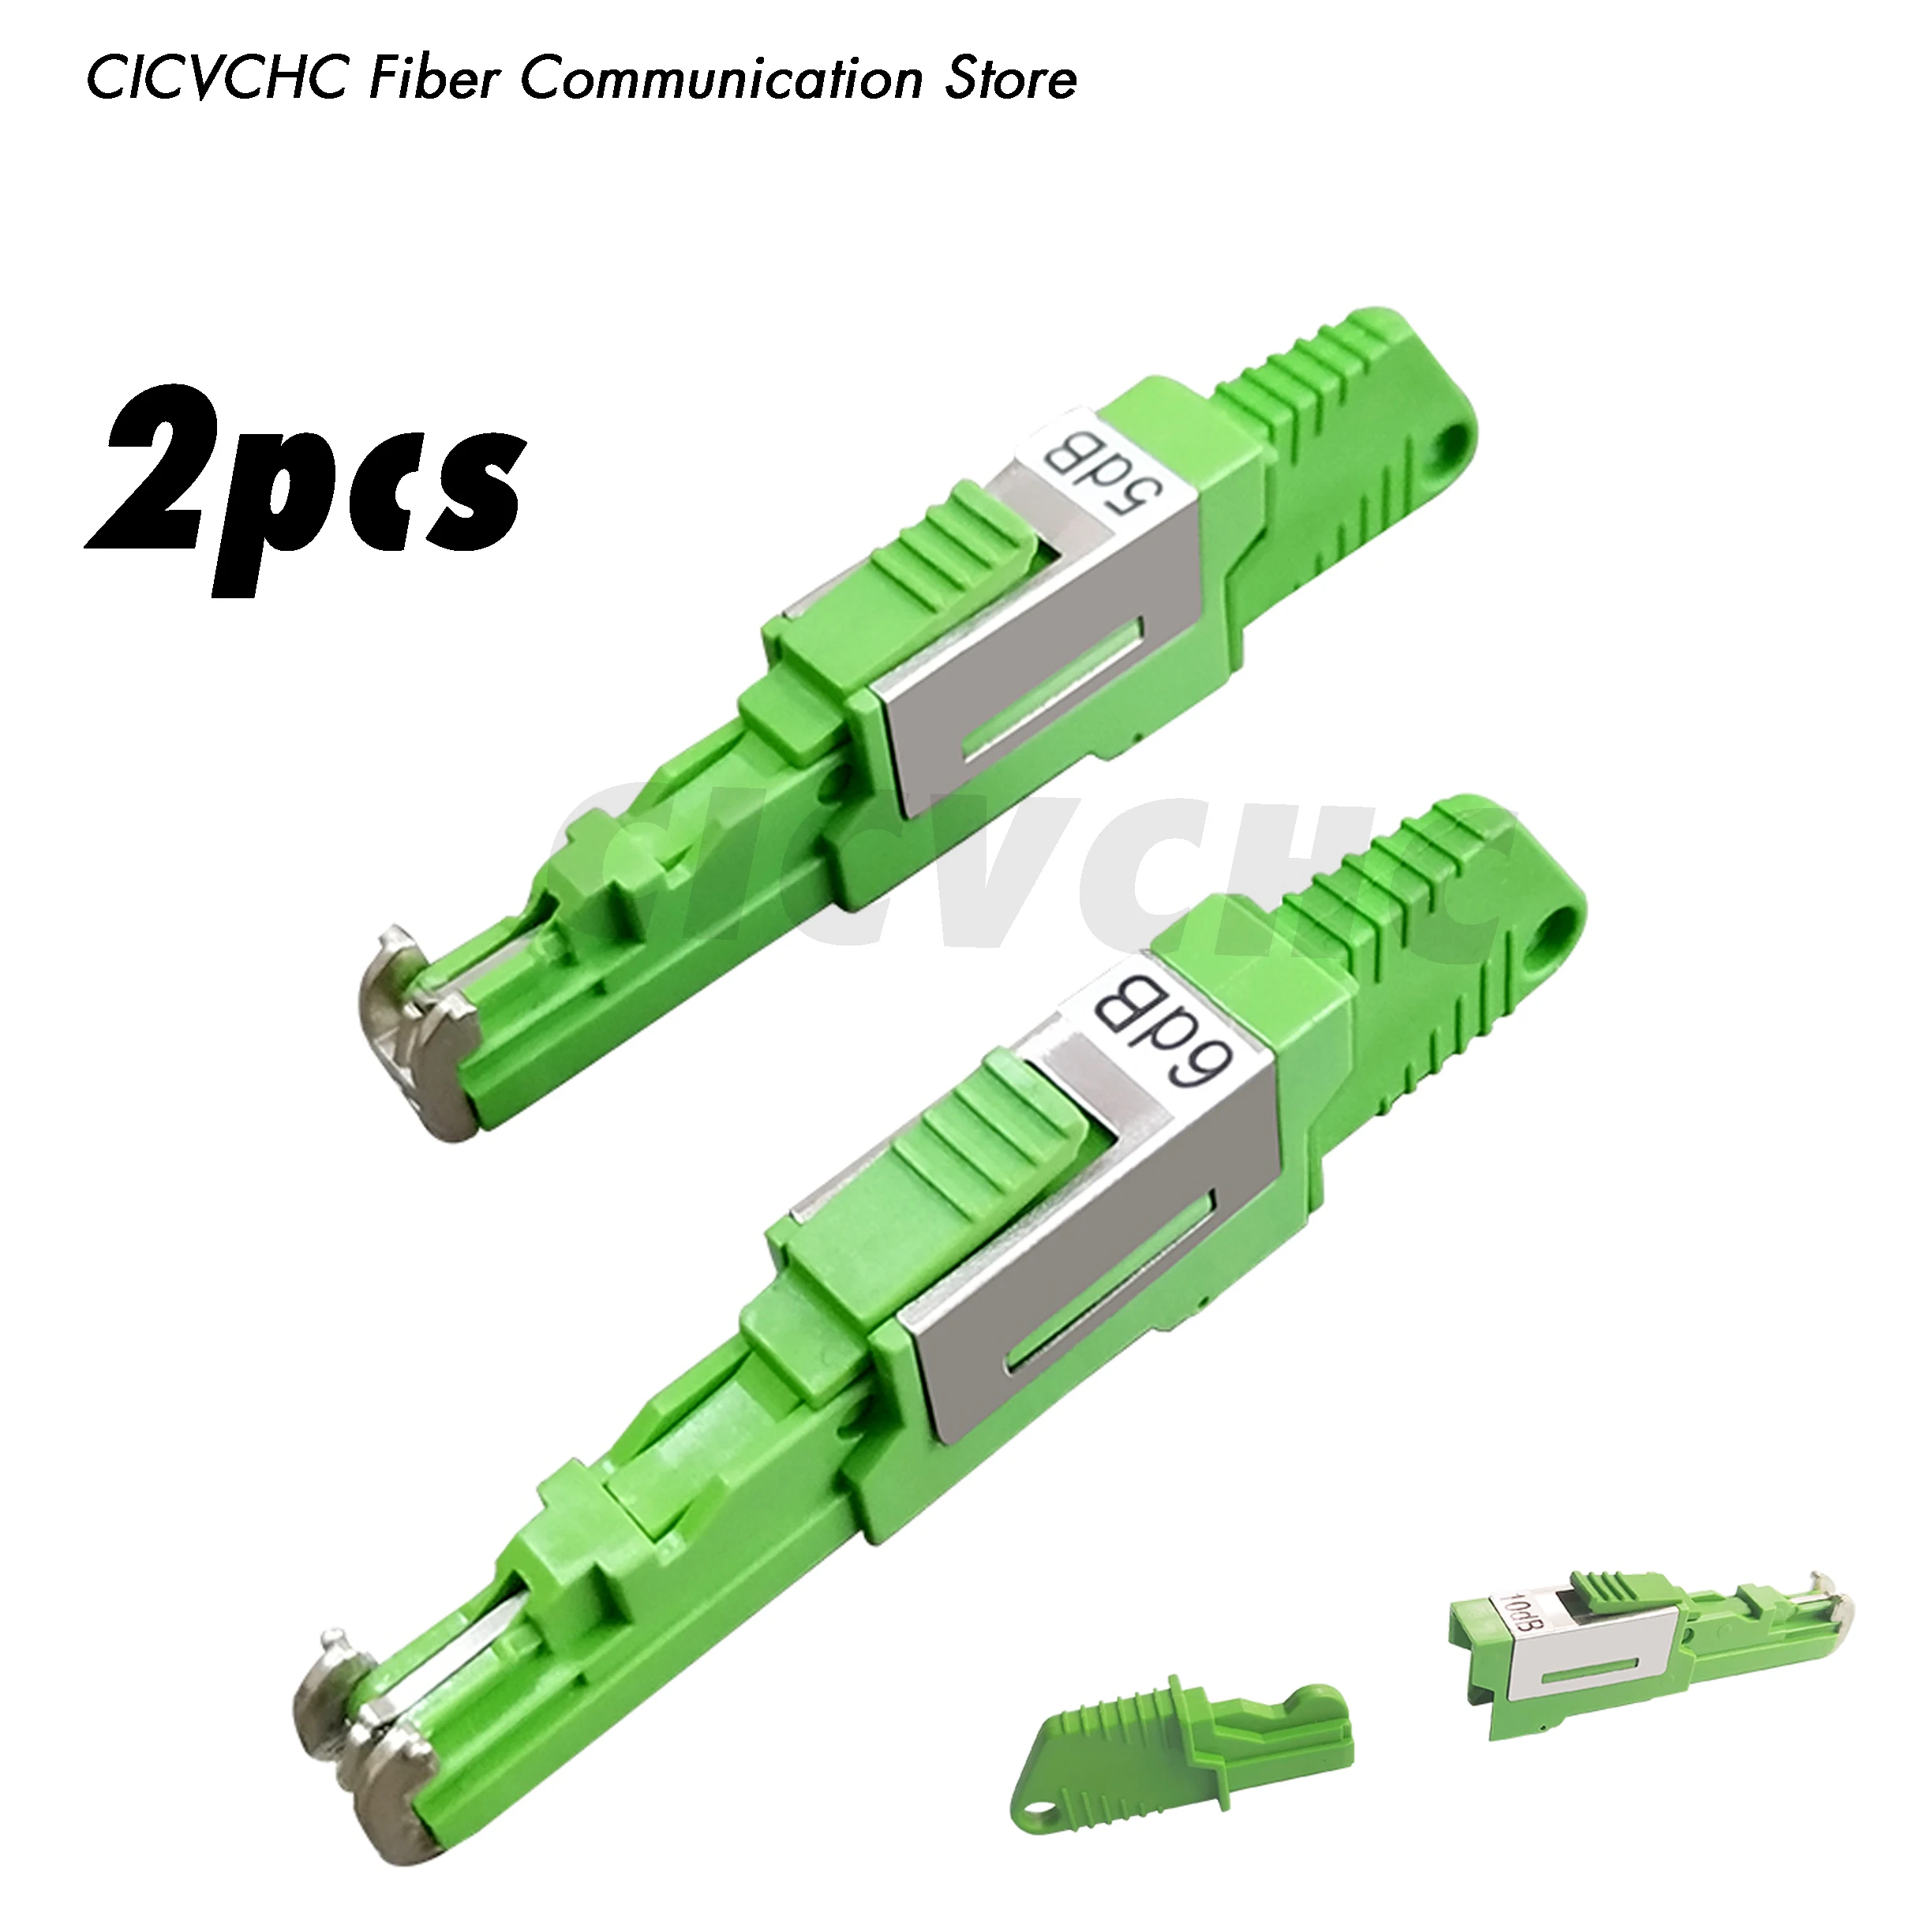 2pcs LSH/APC (E2000/APC) Male to Female Attenuators (0, 1 to 25dB)/Plug-in type /Fiber Optical